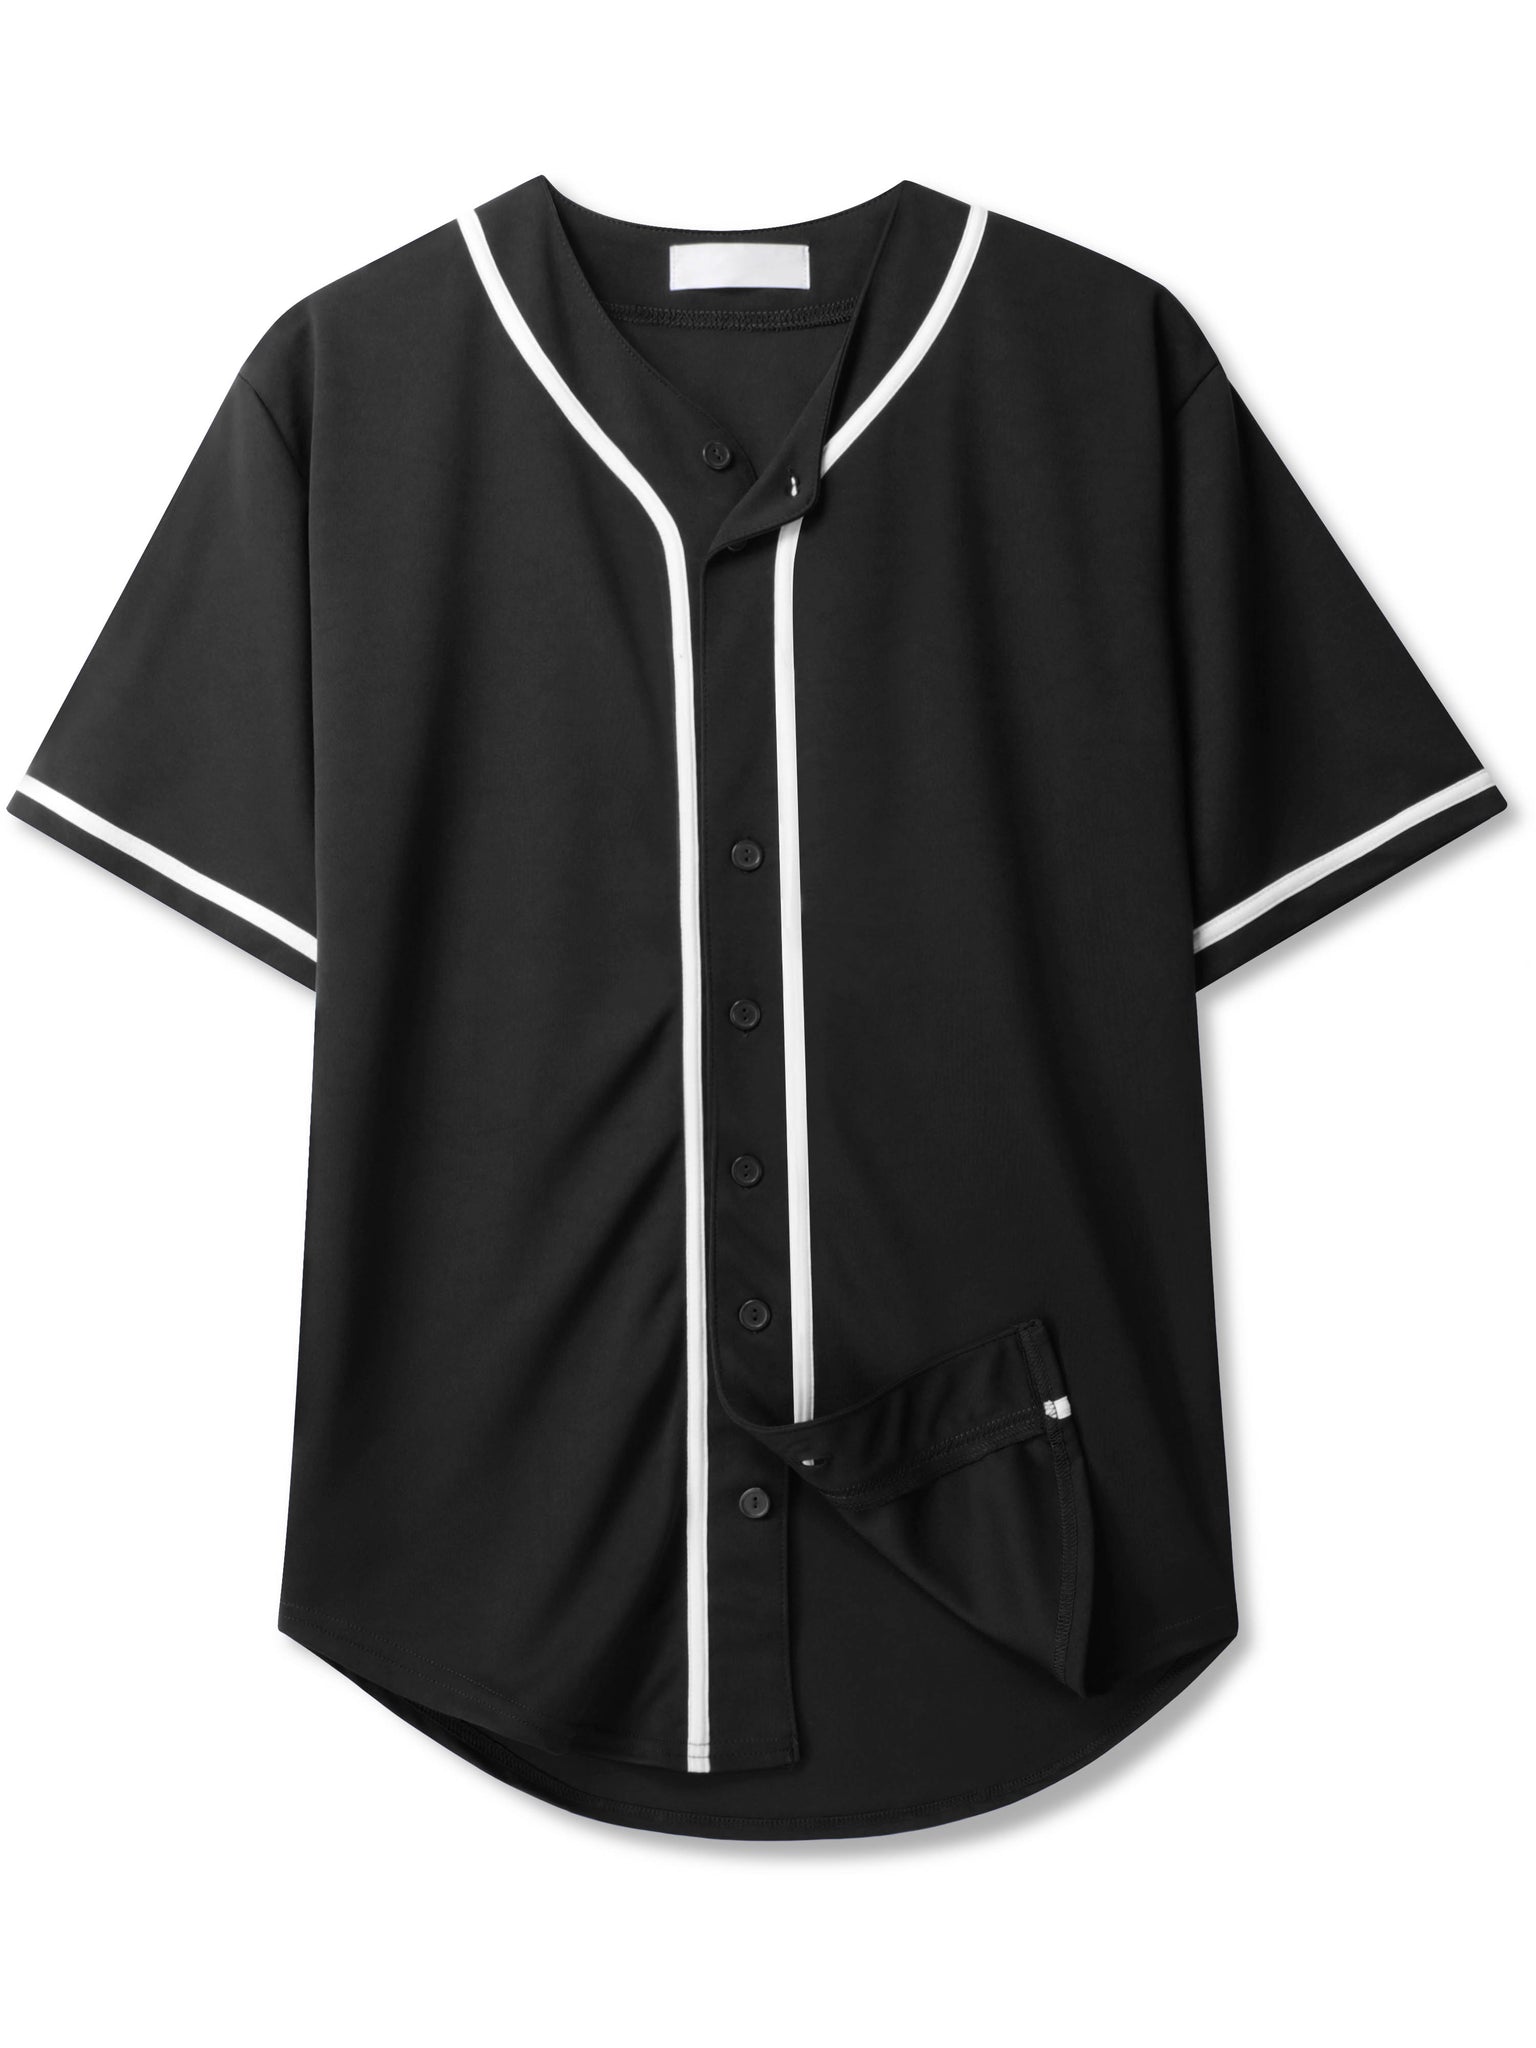 Mens Team Sports Printable Blank Baseball Jersey Collar Button Up Shirts